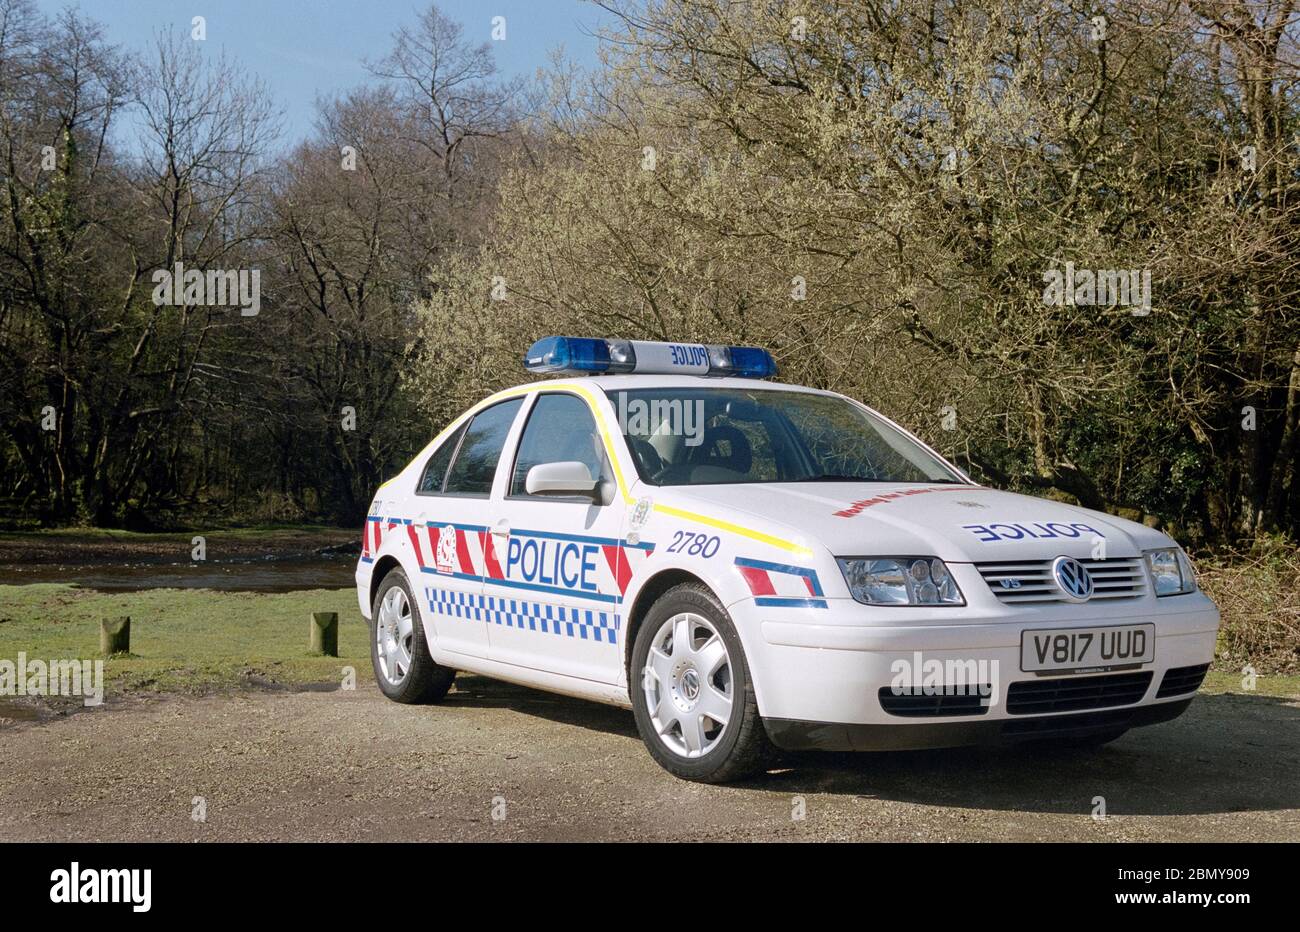 1999 VW Volkswagen Bora as a Hampshire Constabulary Police patrol vehicle. Hampshire, England, UK. Stock Photo